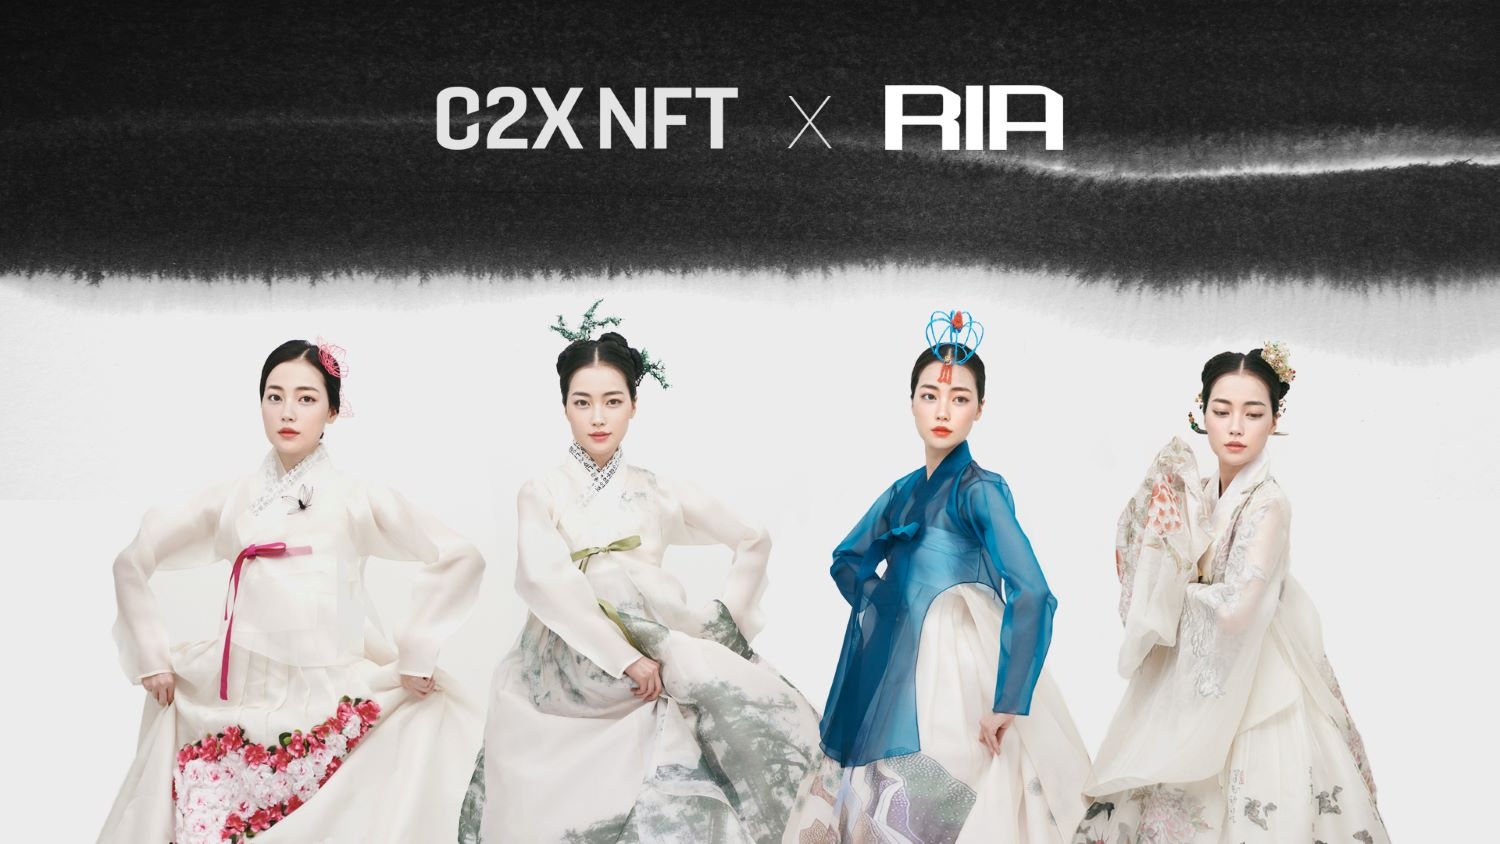 C2X NFT 마켓플레이스, 가상인간 '리아' 미공개 한복 화보 NFT 판매